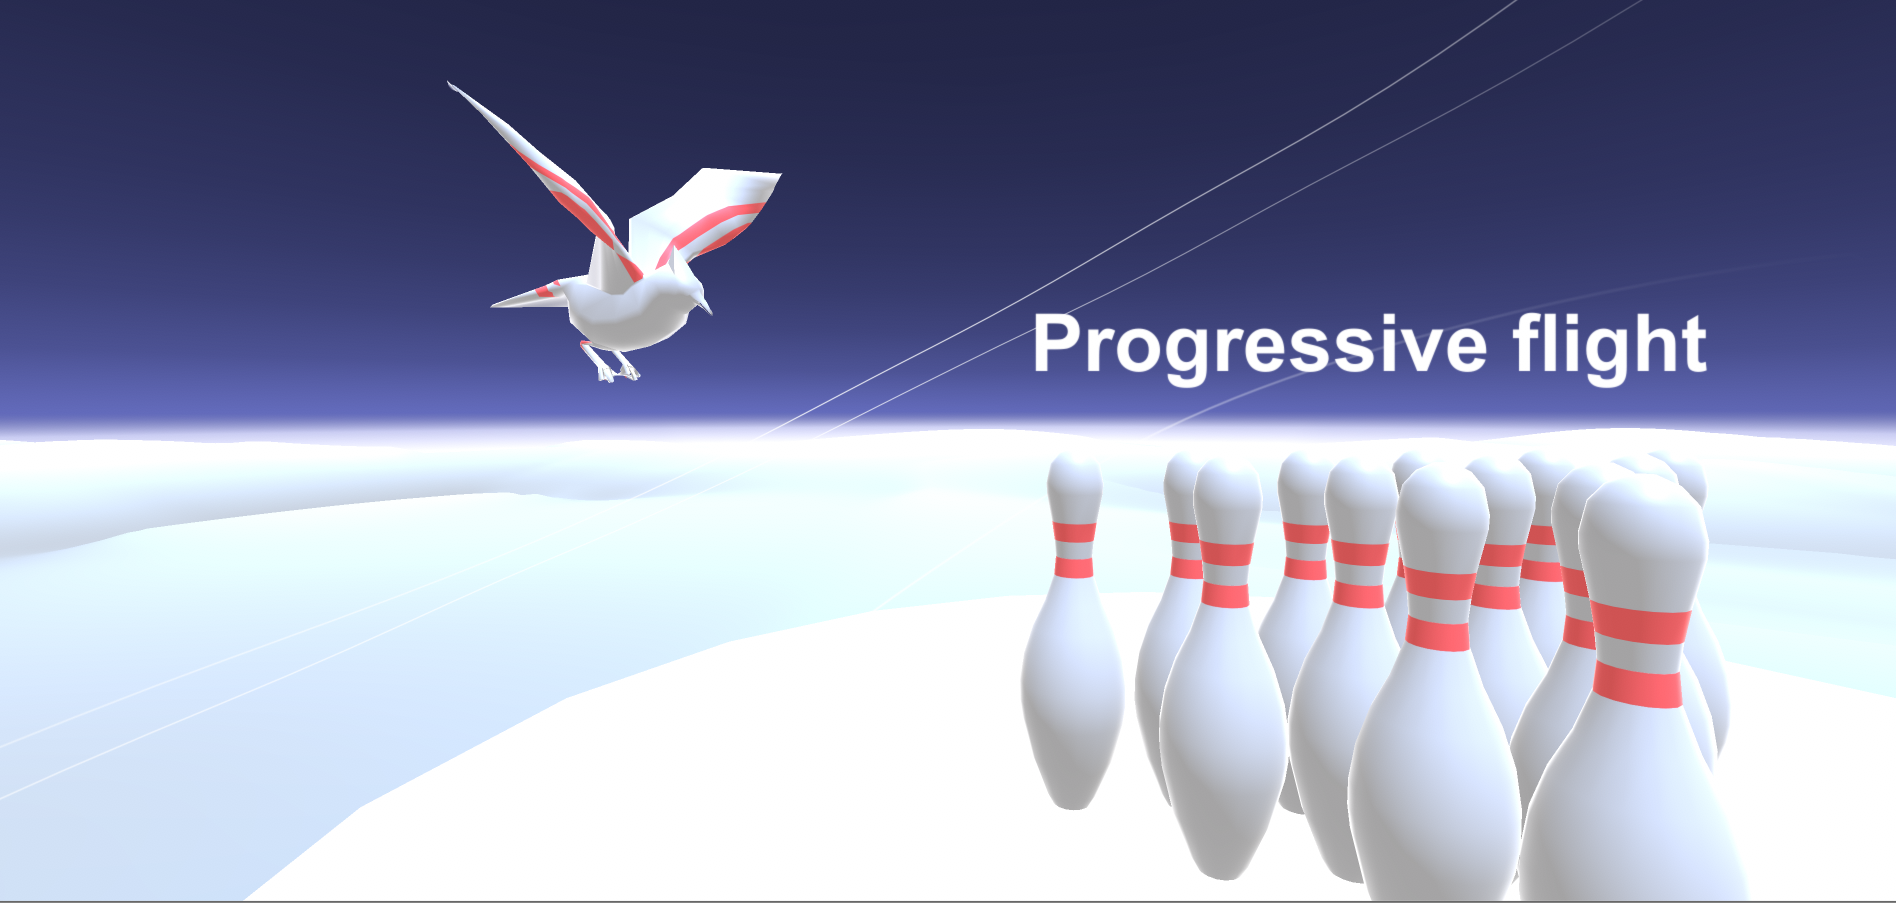 Progressive flight